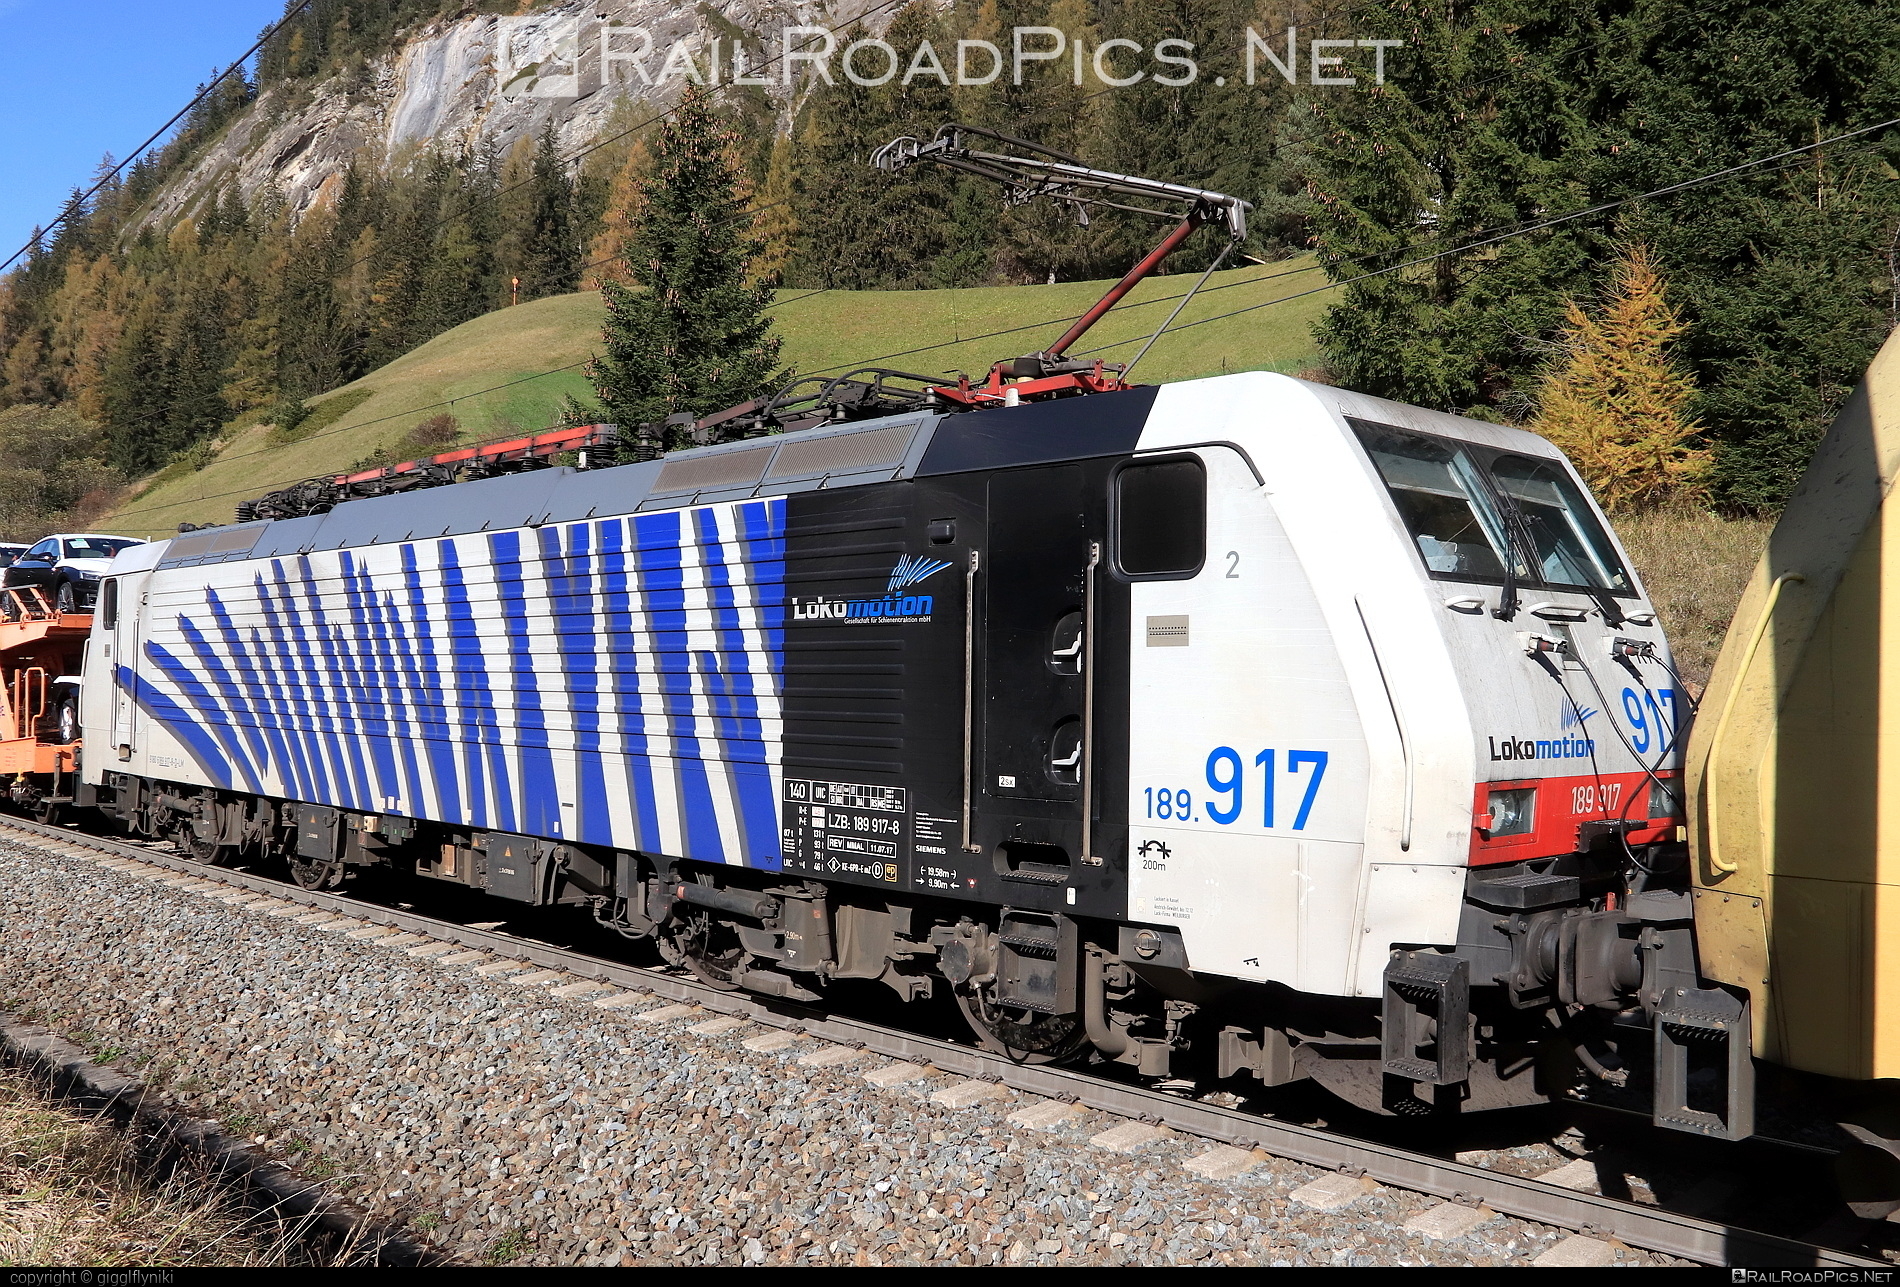 Siemens ES 64 F4 - 189 917 operated by Rail Traction Company #LokomotionGesellschaftFurSchienentraktion #RailTractionCompany #es64 #es64f4 #eurosprinter #lokomotion #rtc #siemens #siemensEs64 #siemensEs64f4